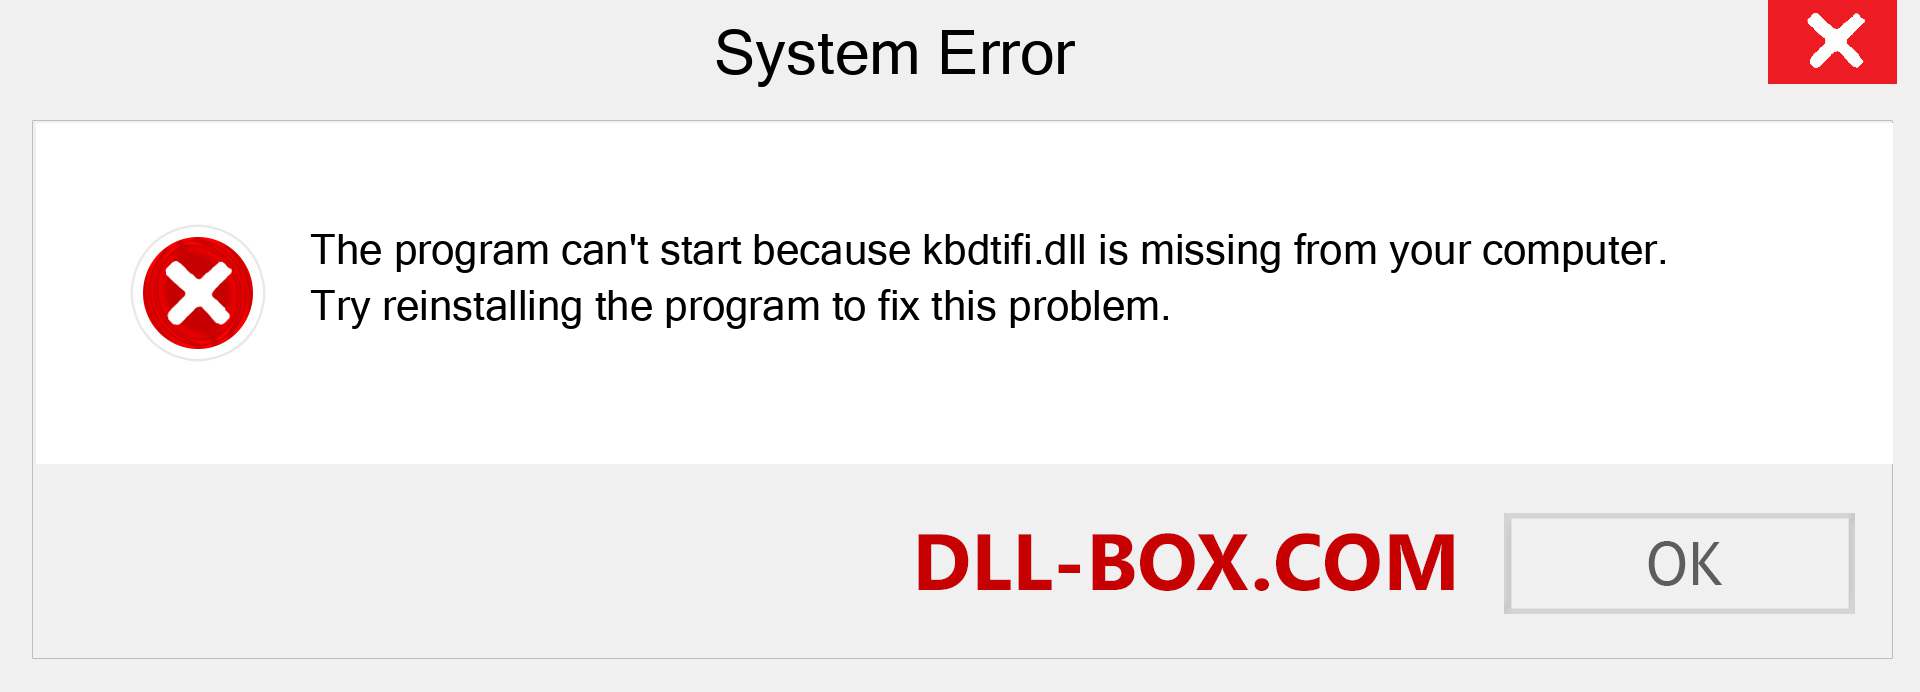  kbdtifi.dll file is missing?. Download for Windows 7, 8, 10 - Fix  kbdtifi dll Missing Error on Windows, photos, images